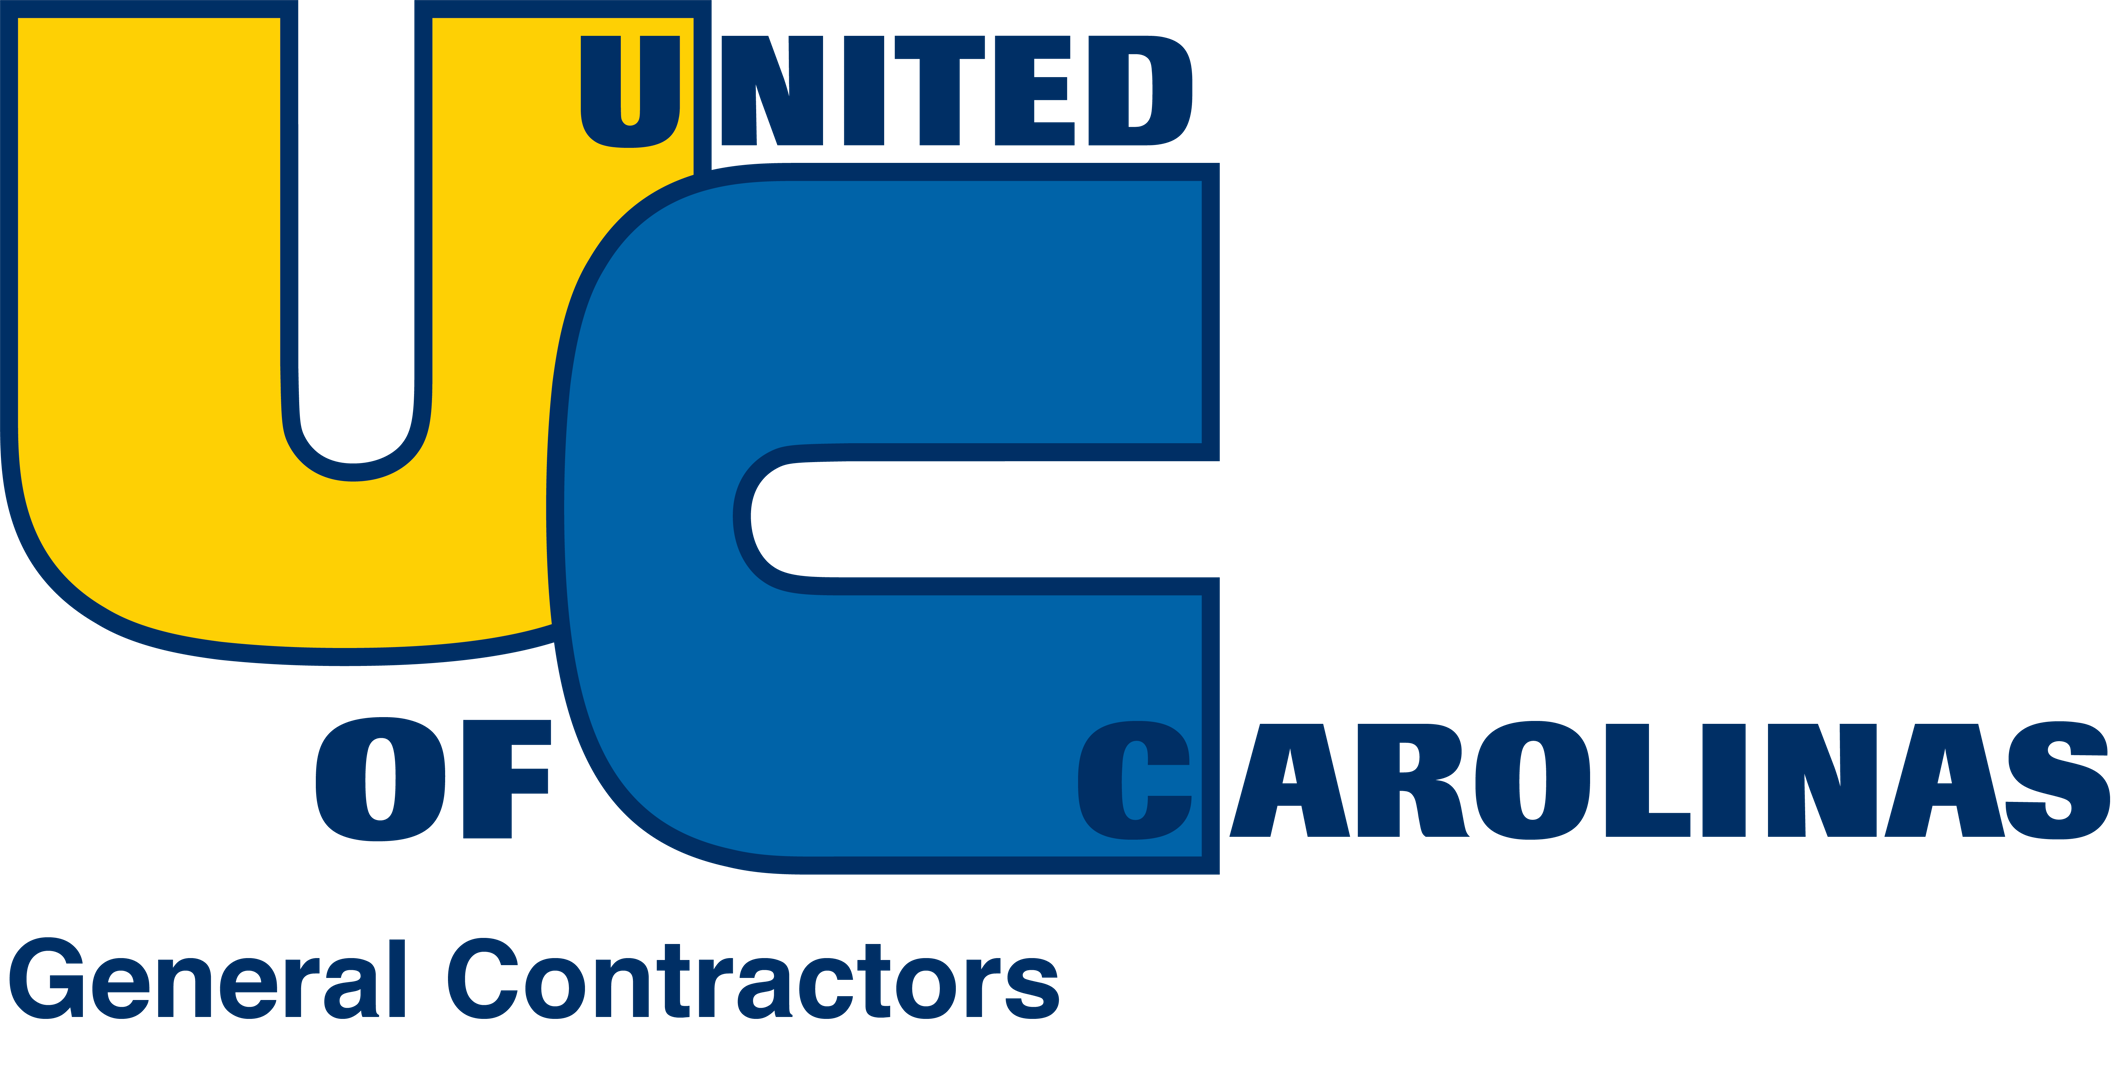 United of Carolinas banner